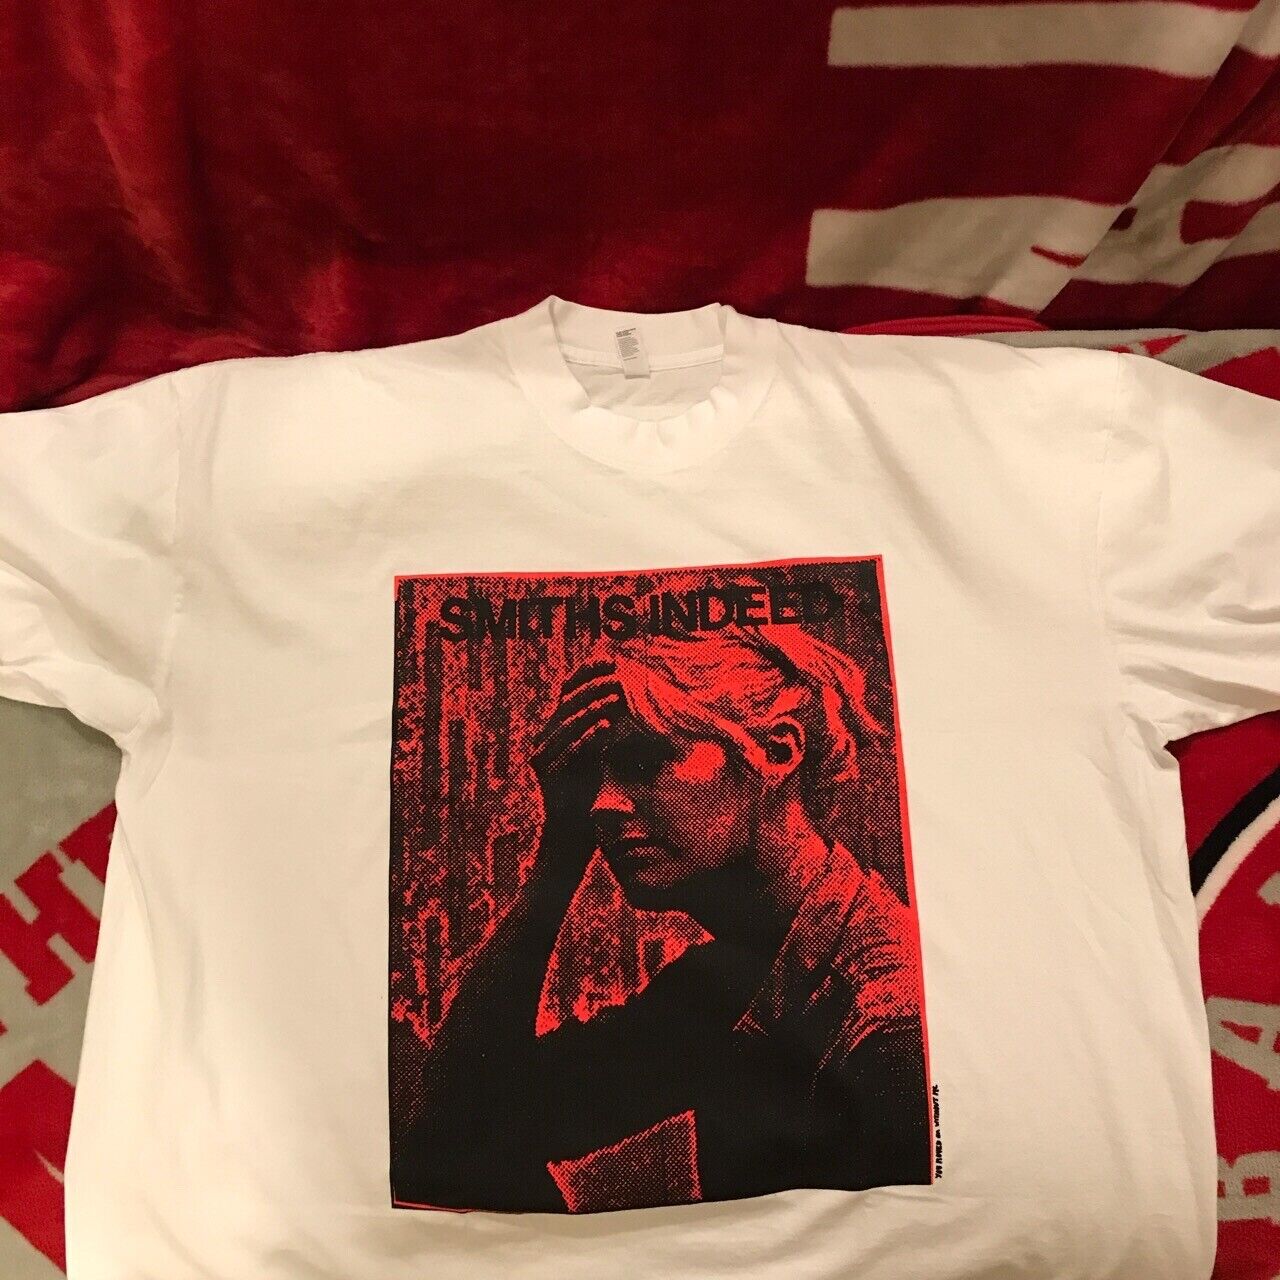 The Smiths / Morrissey Shirt Rare Fanzine Design Xxl